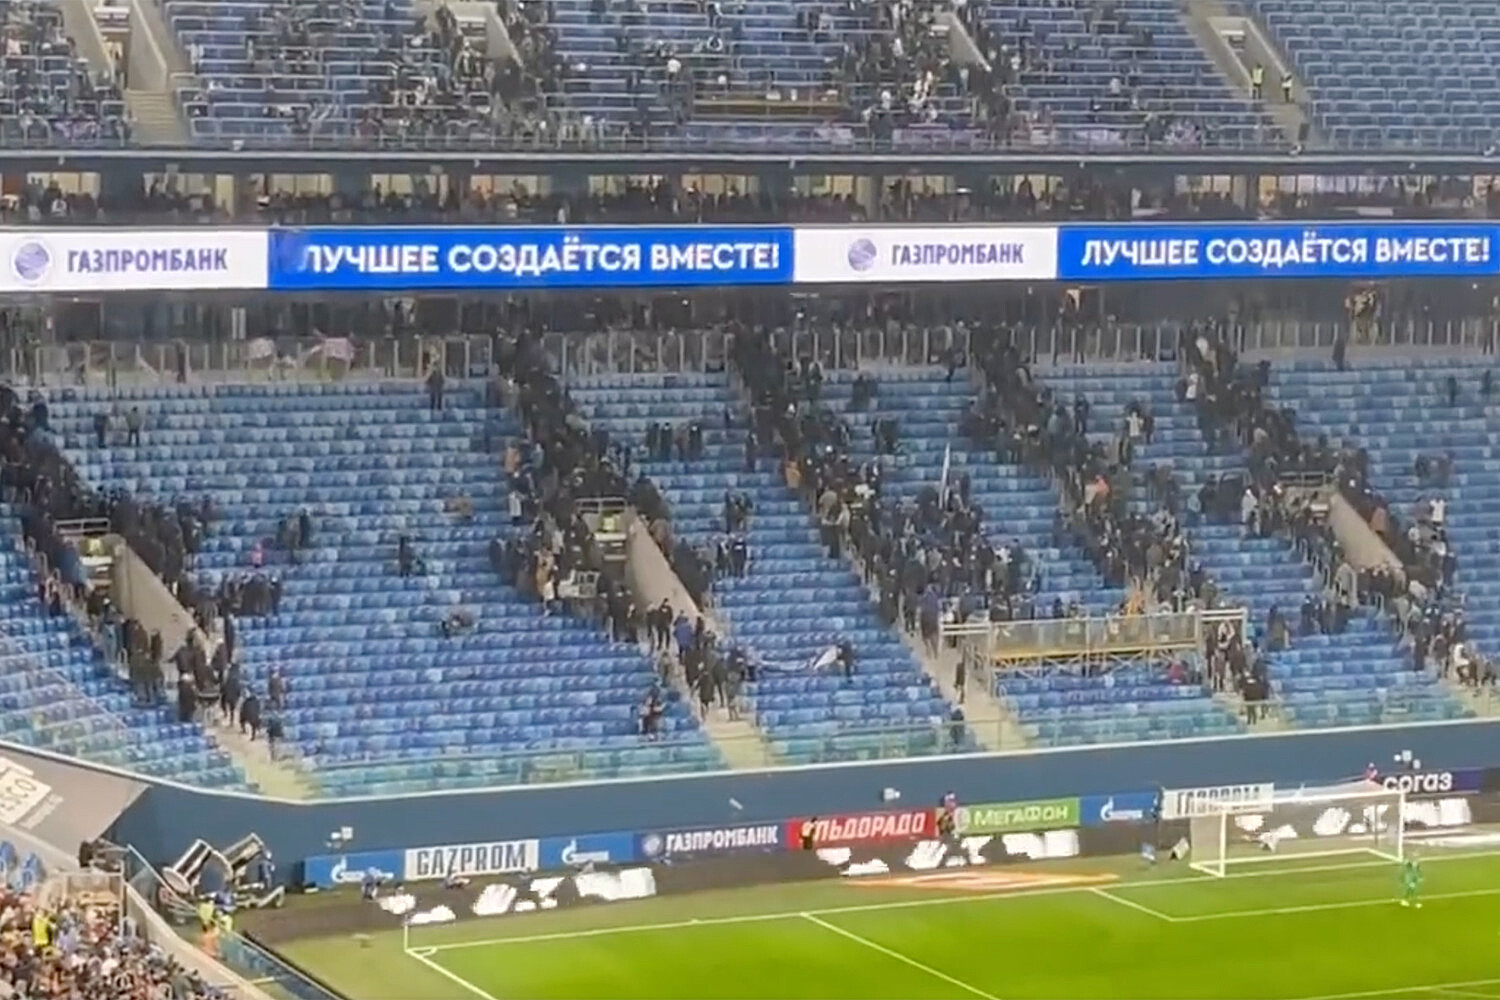 Фанаты "Зенита" покинули стадион посреди матча